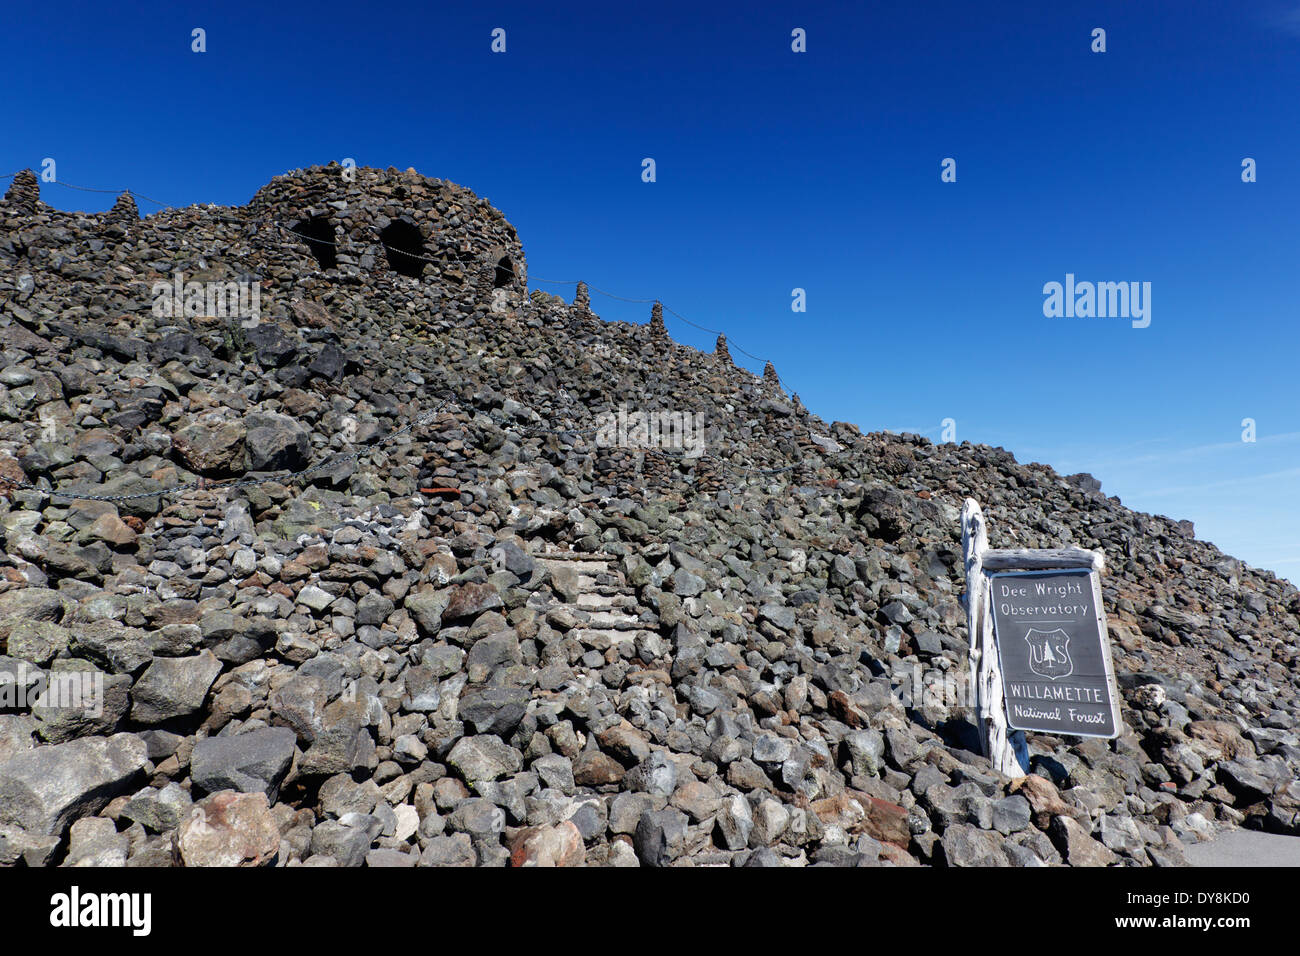 USA, Oregon, Willamette National Forest, McKenzie Pass, 5325 feet, Dee Wright Observatory Stock Photo